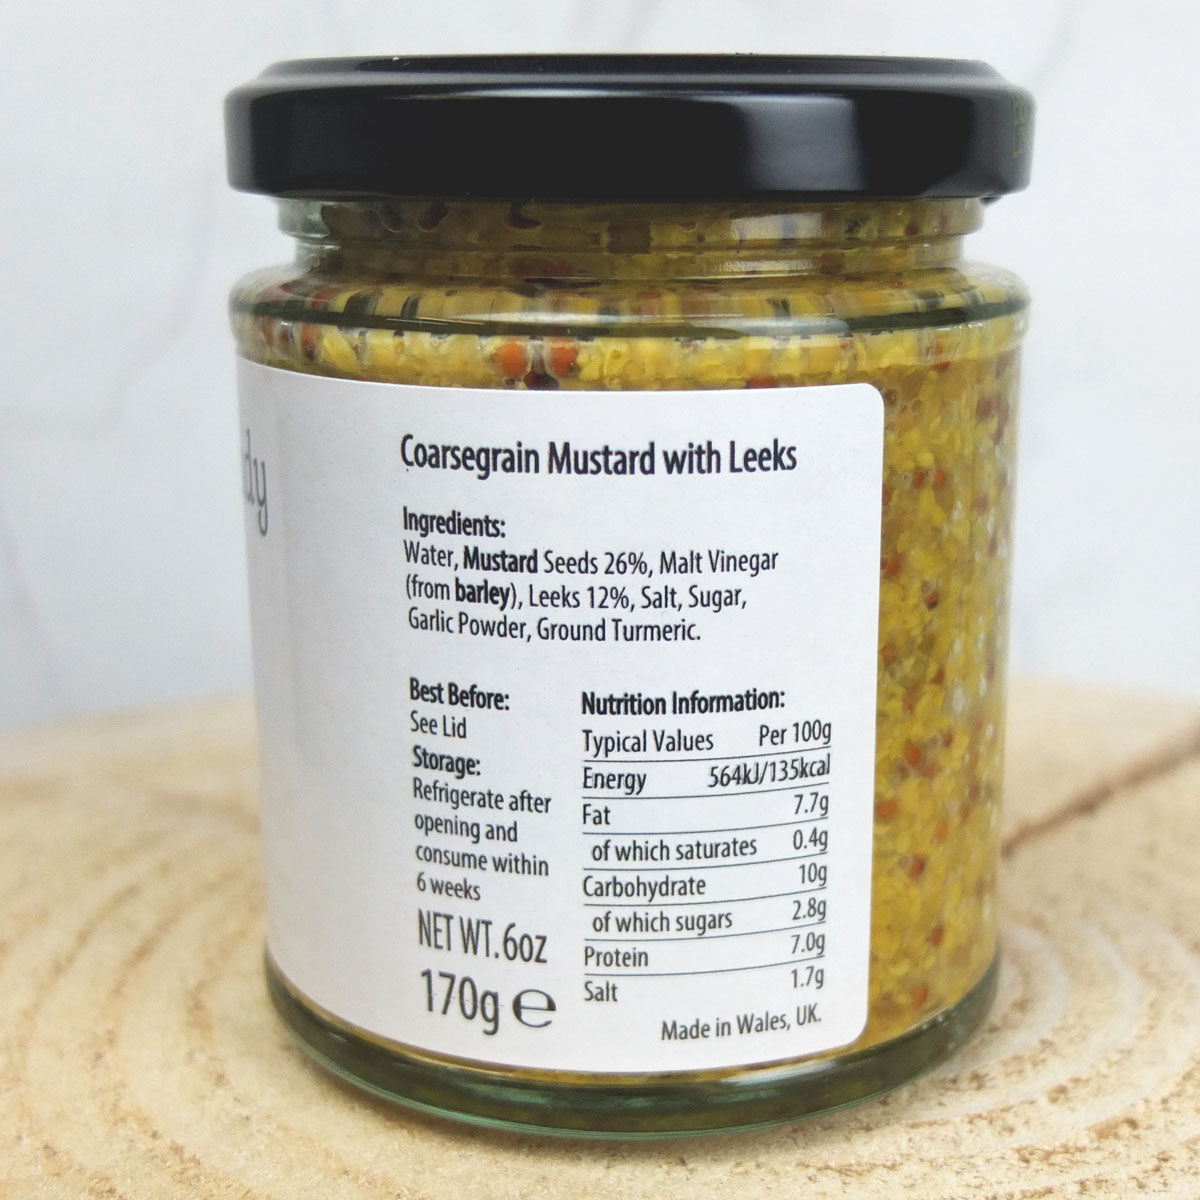 Leek Mustard by Welsh Lady Preserves